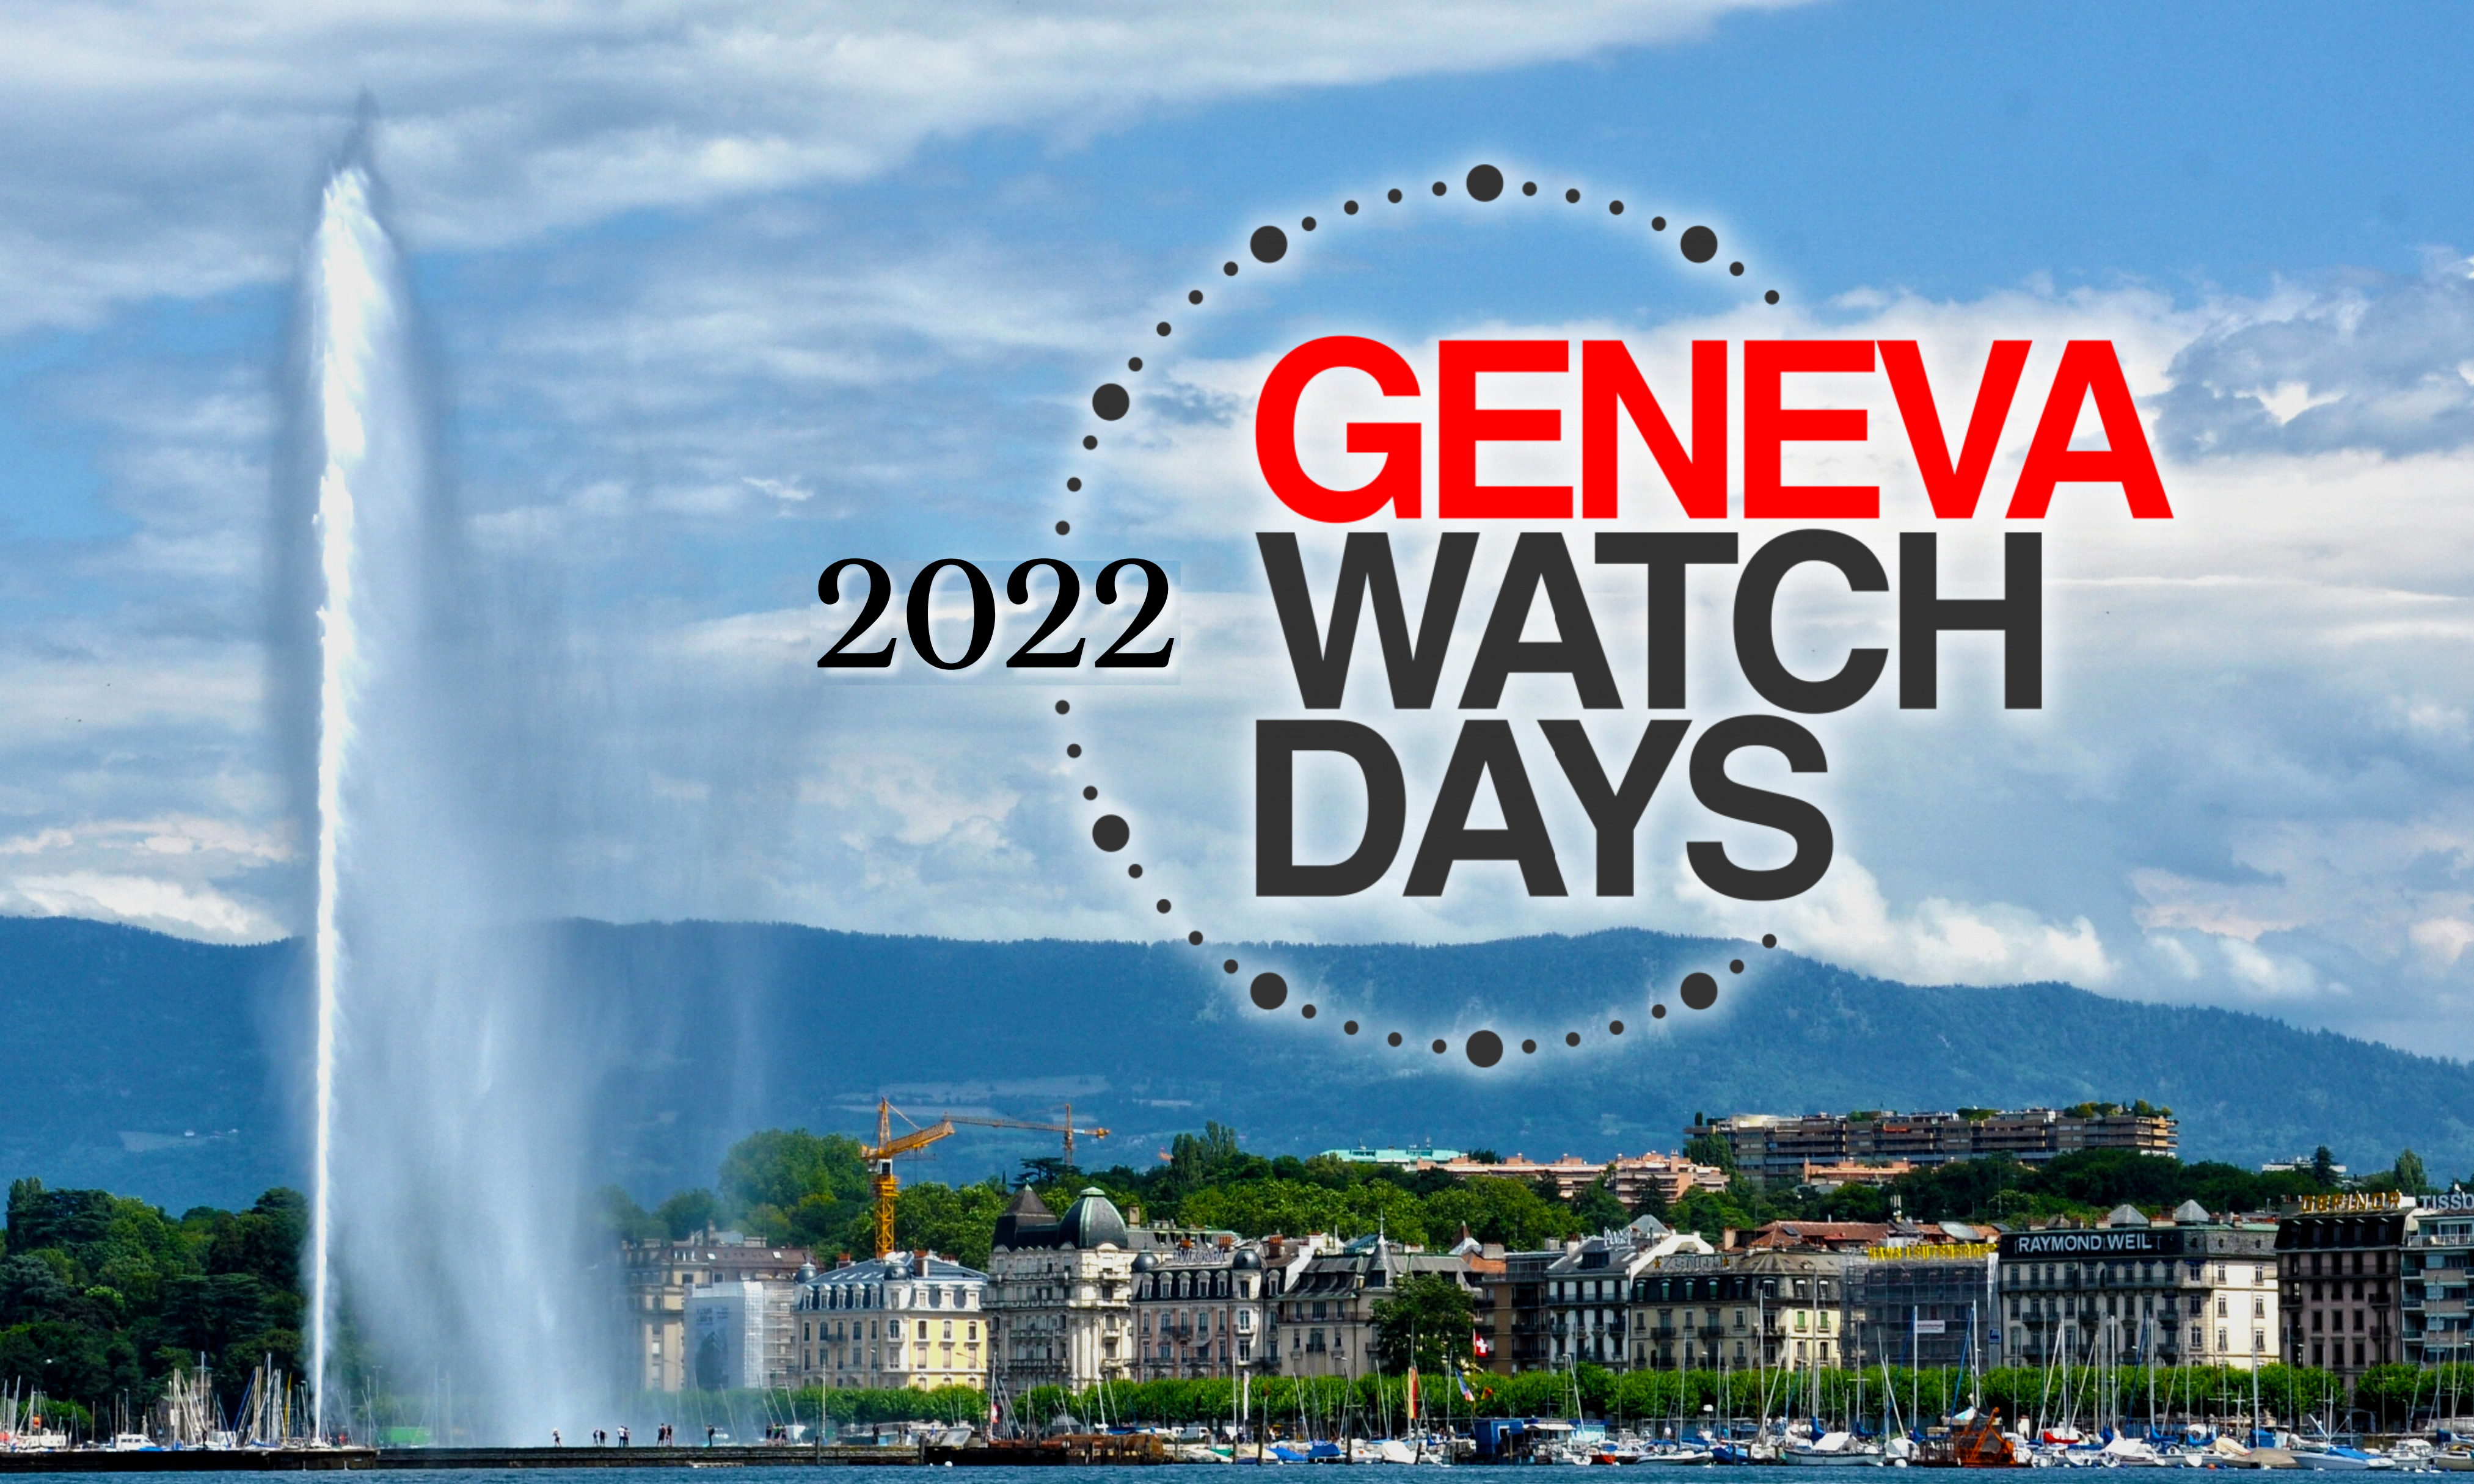 Jamm at Geneva Watch Days